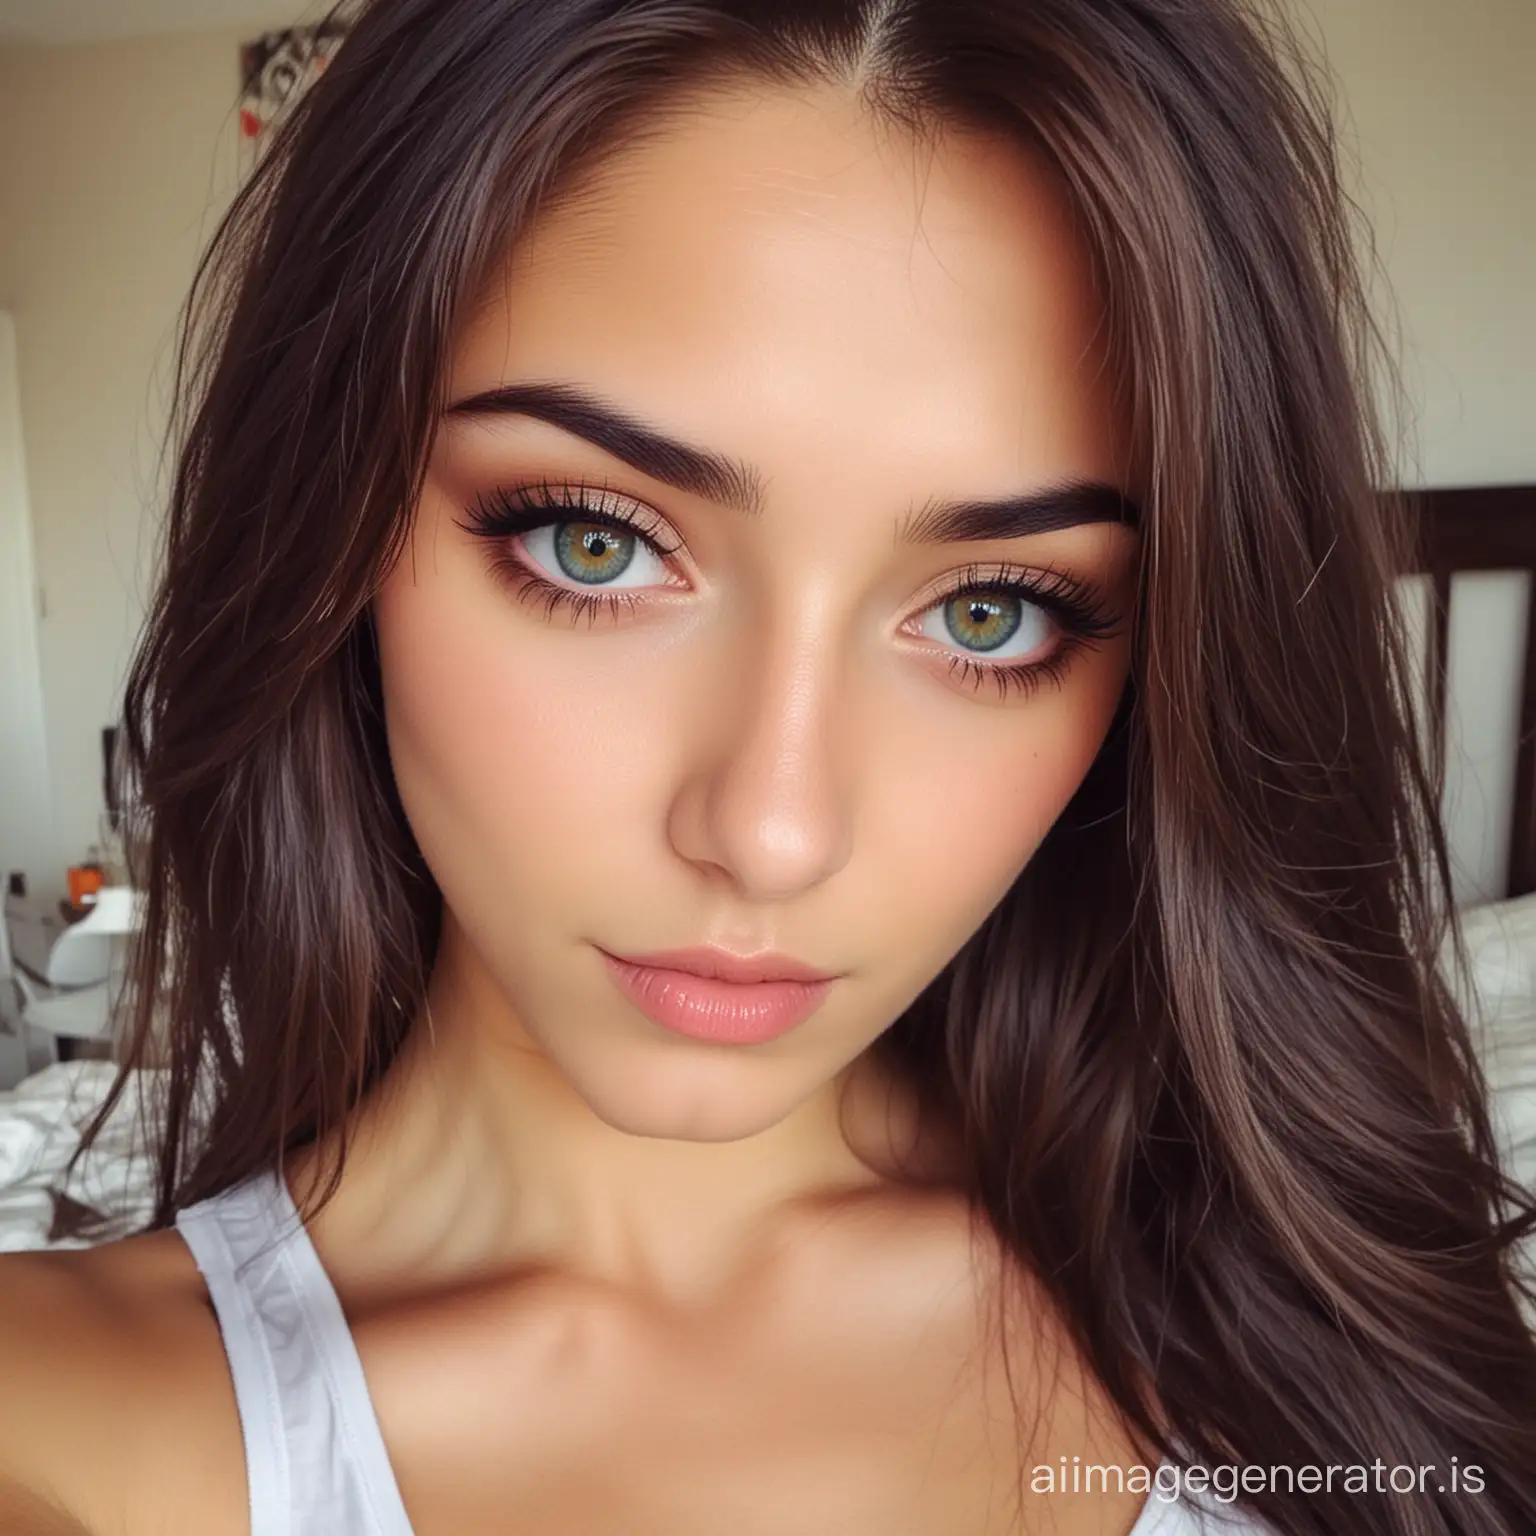 Stunning-Turkish-Girl-with-Colorful-Eyes-Taking-Bedroom-Selfie